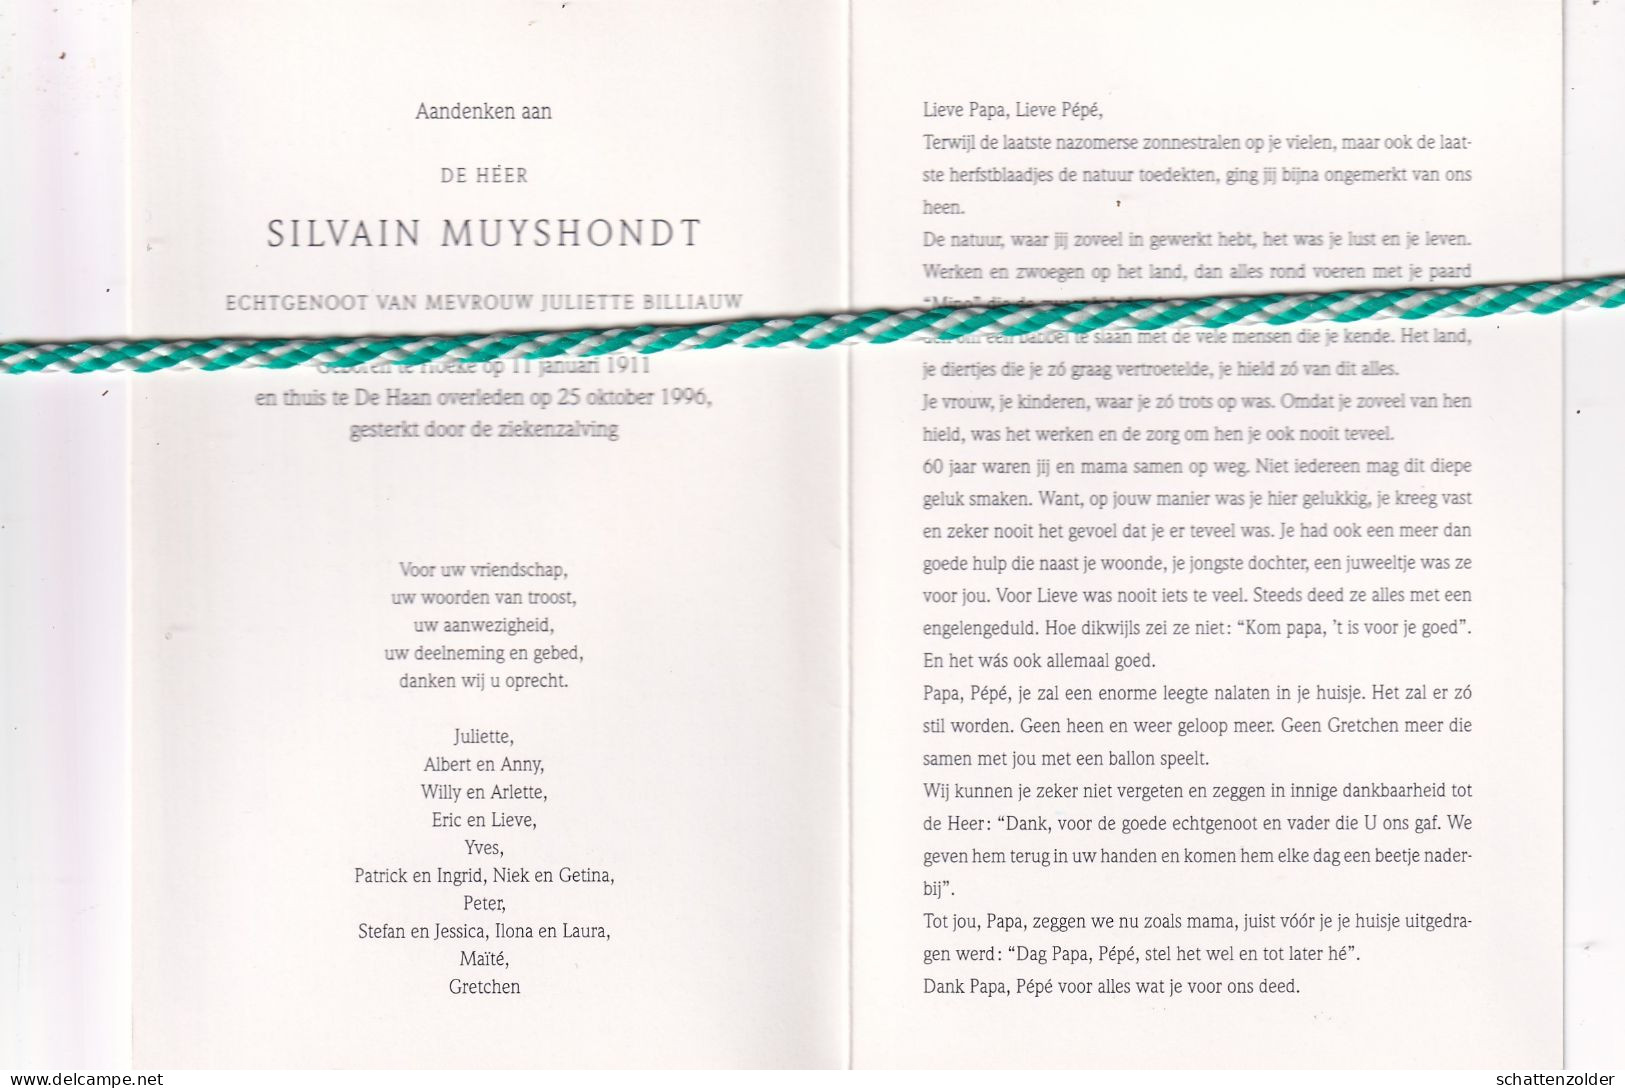 Silvain Muyshondt-Billiauw, Hoeke 1911, De Haan 1996. Foto - Esquela